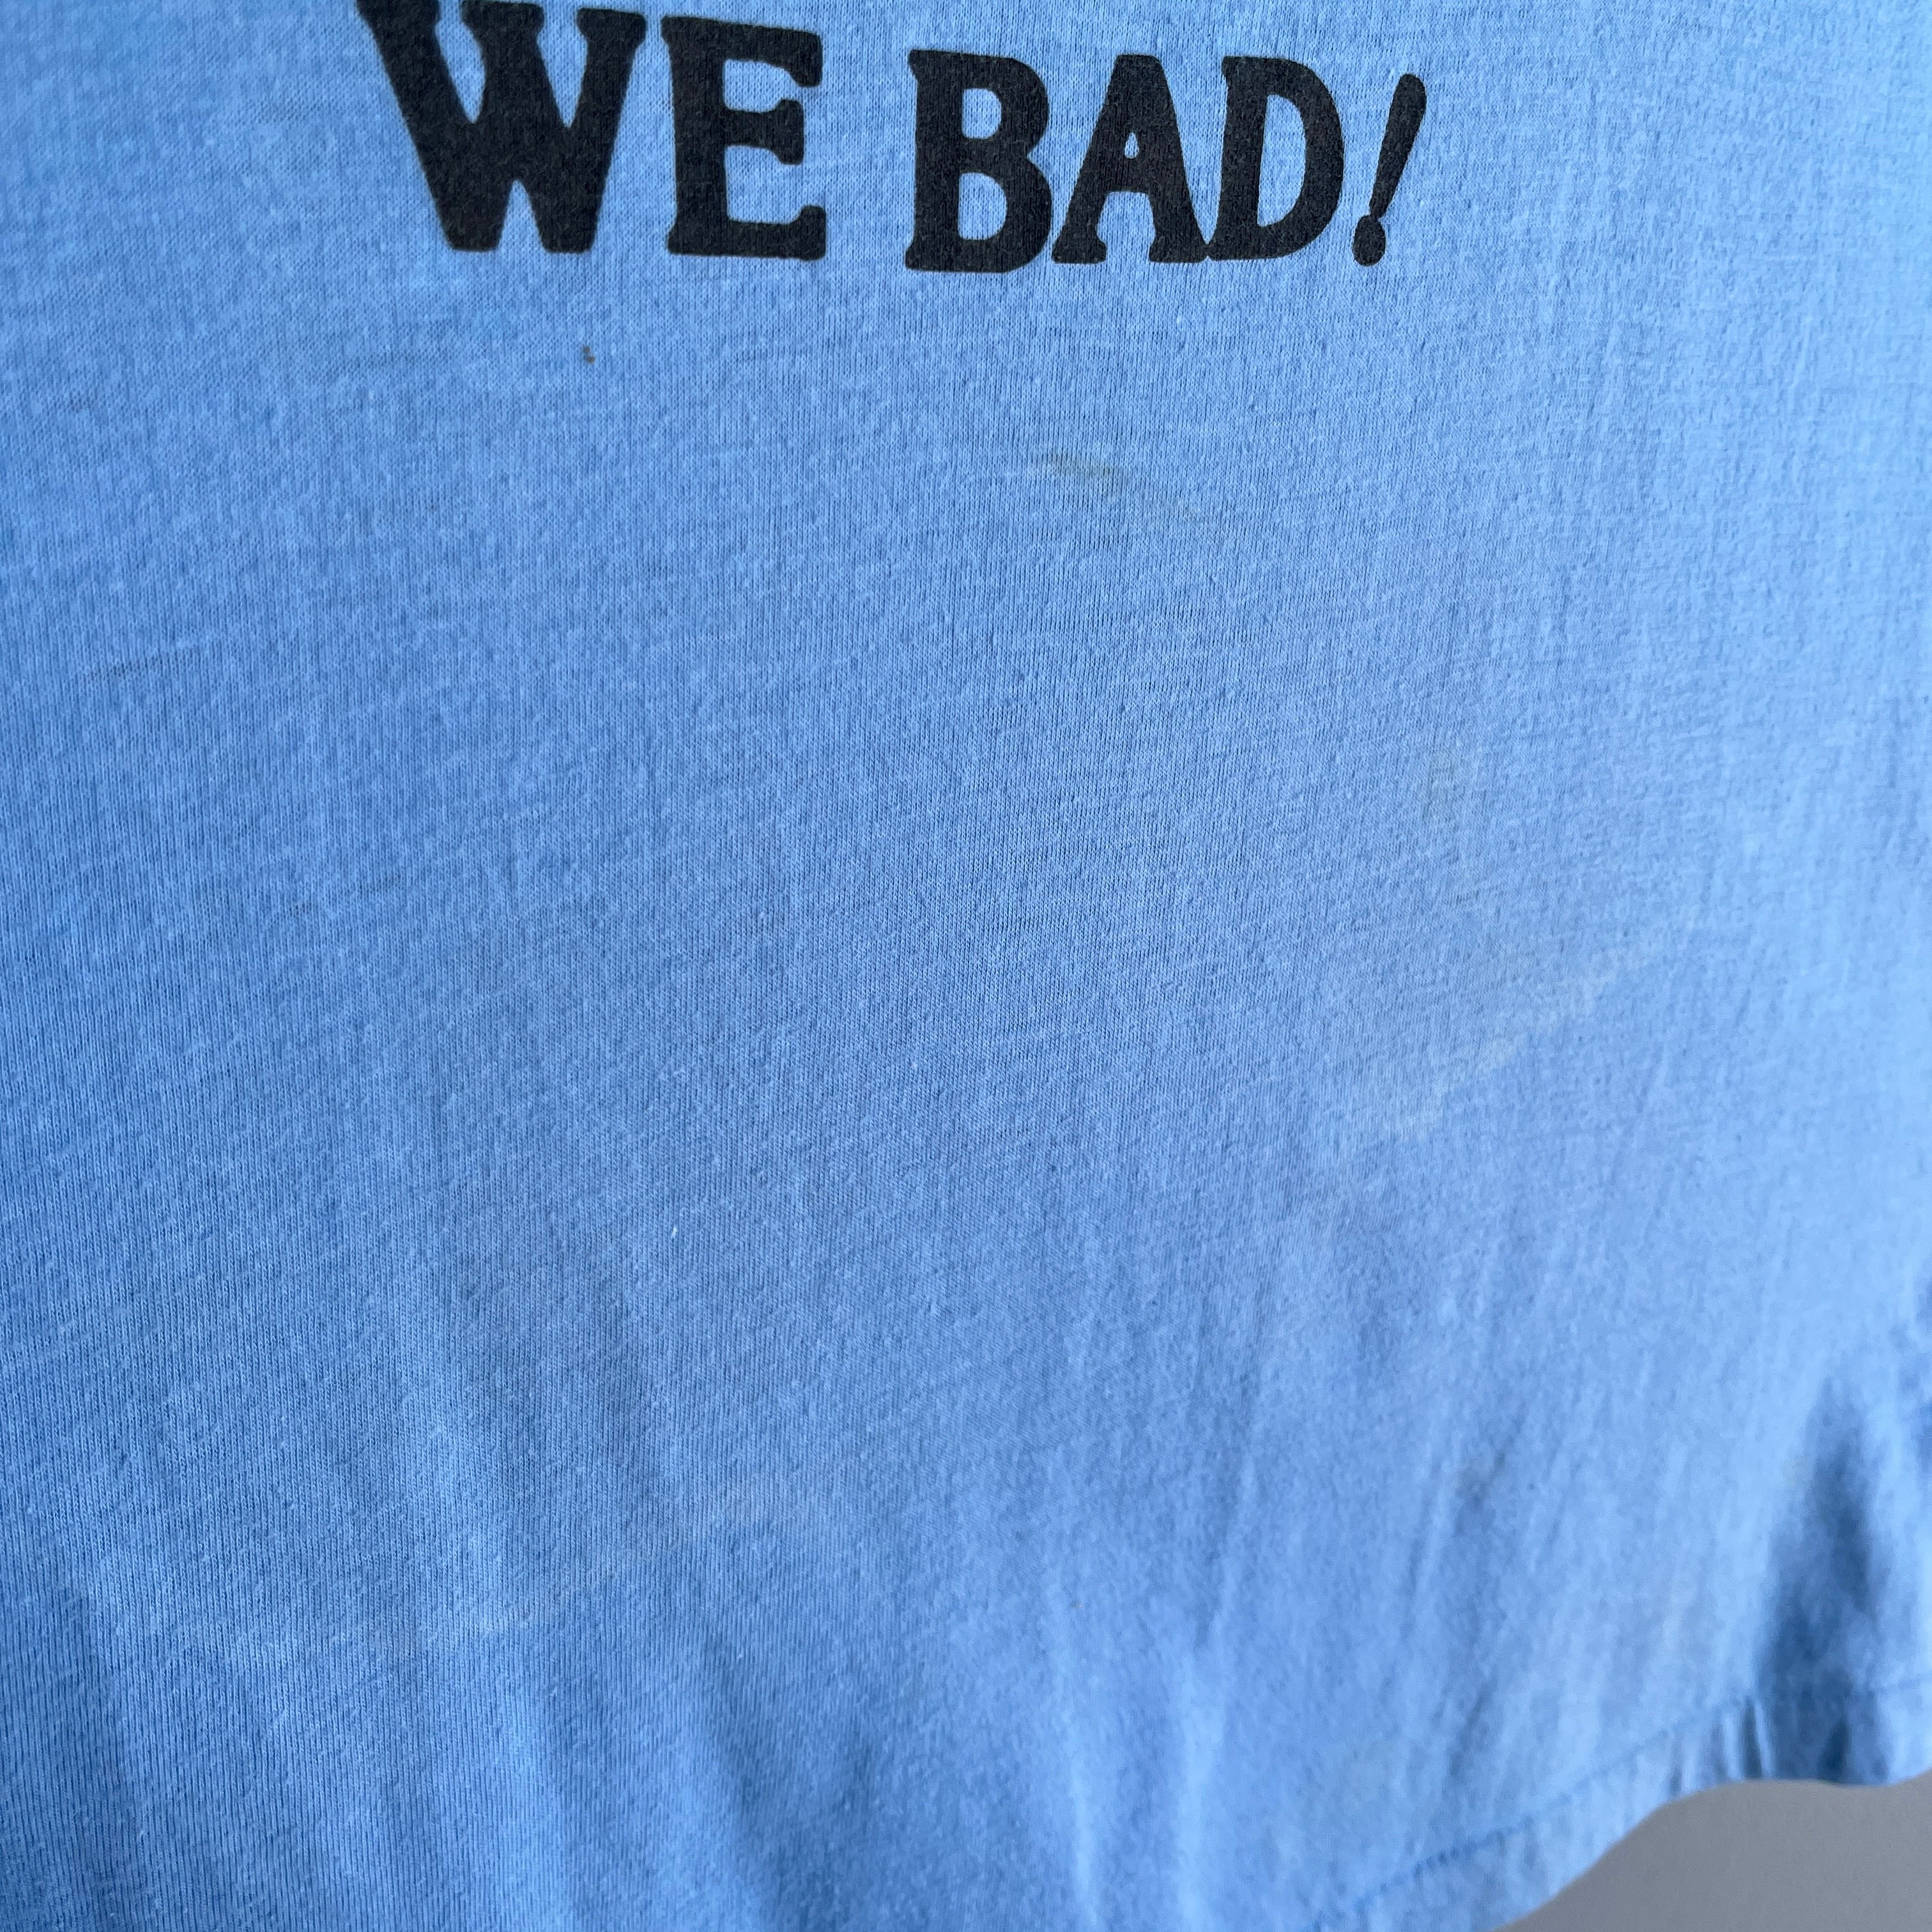 1980s Kansas City Jayhawks - That's Right, We Bad - T-Shirt